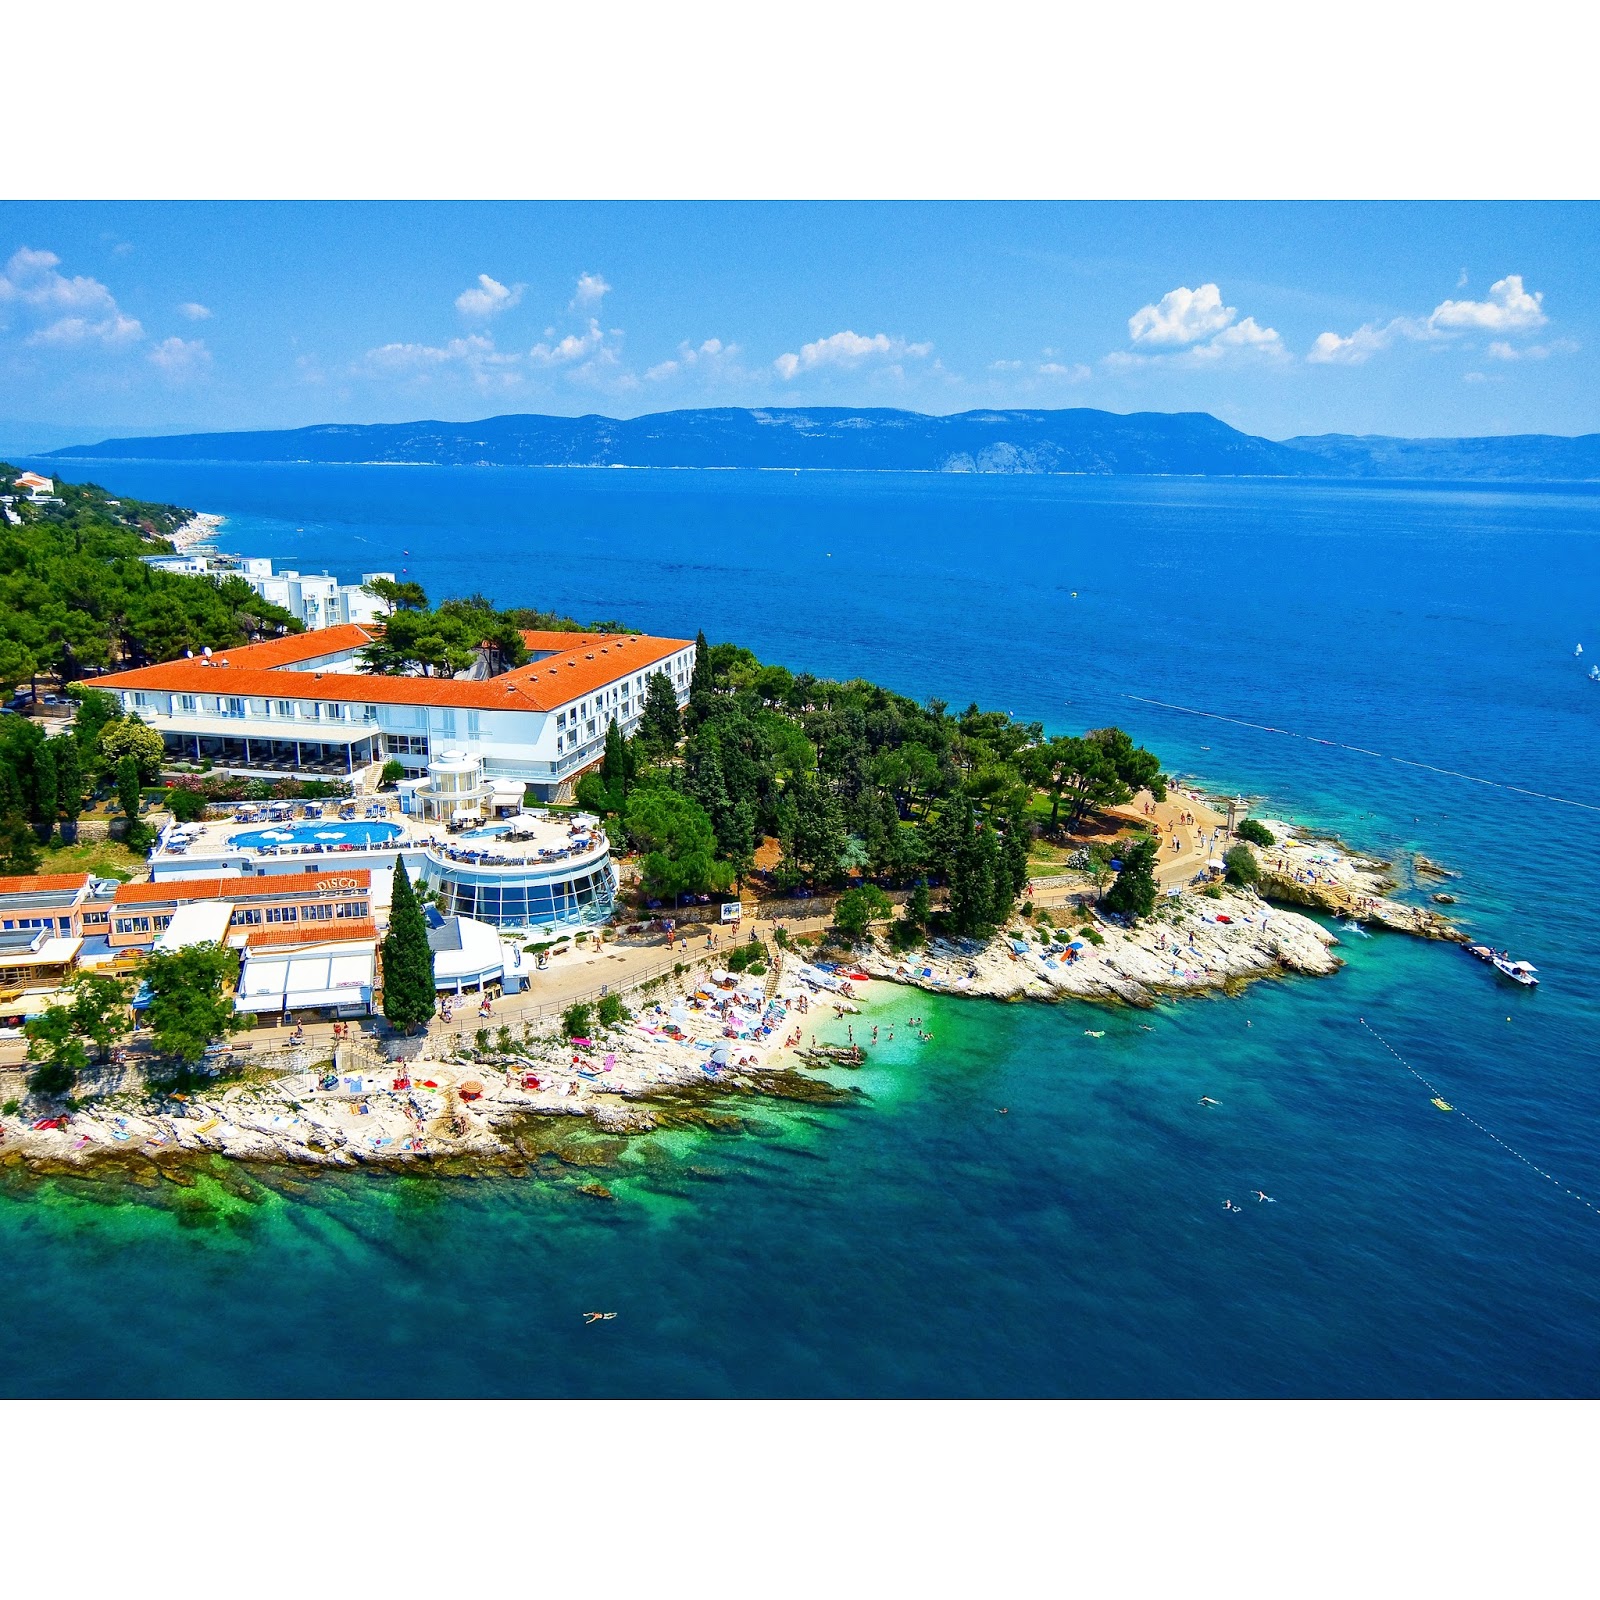 Hotel & Casa Valamar Sanfior, Rabac, Croatia | All around the world ...